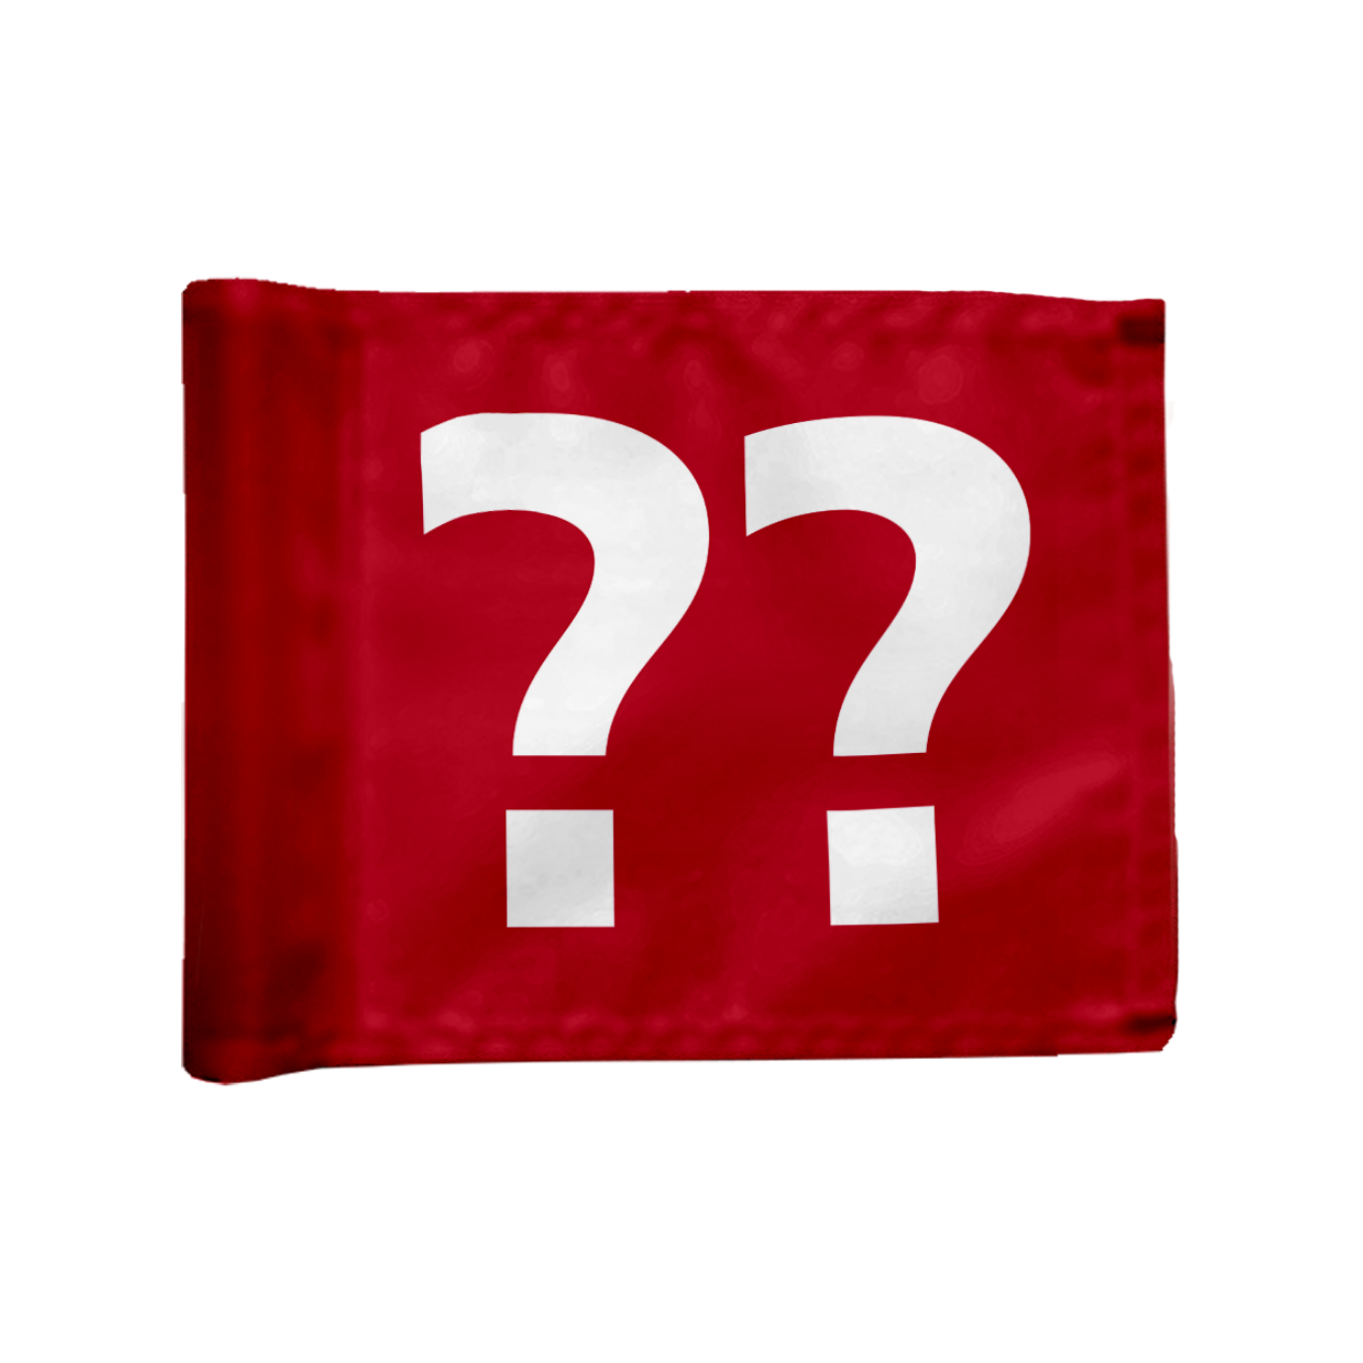 Stykvis Adventure Golf flag i rød med valgfri hulnummer, 200 gram flagdug.